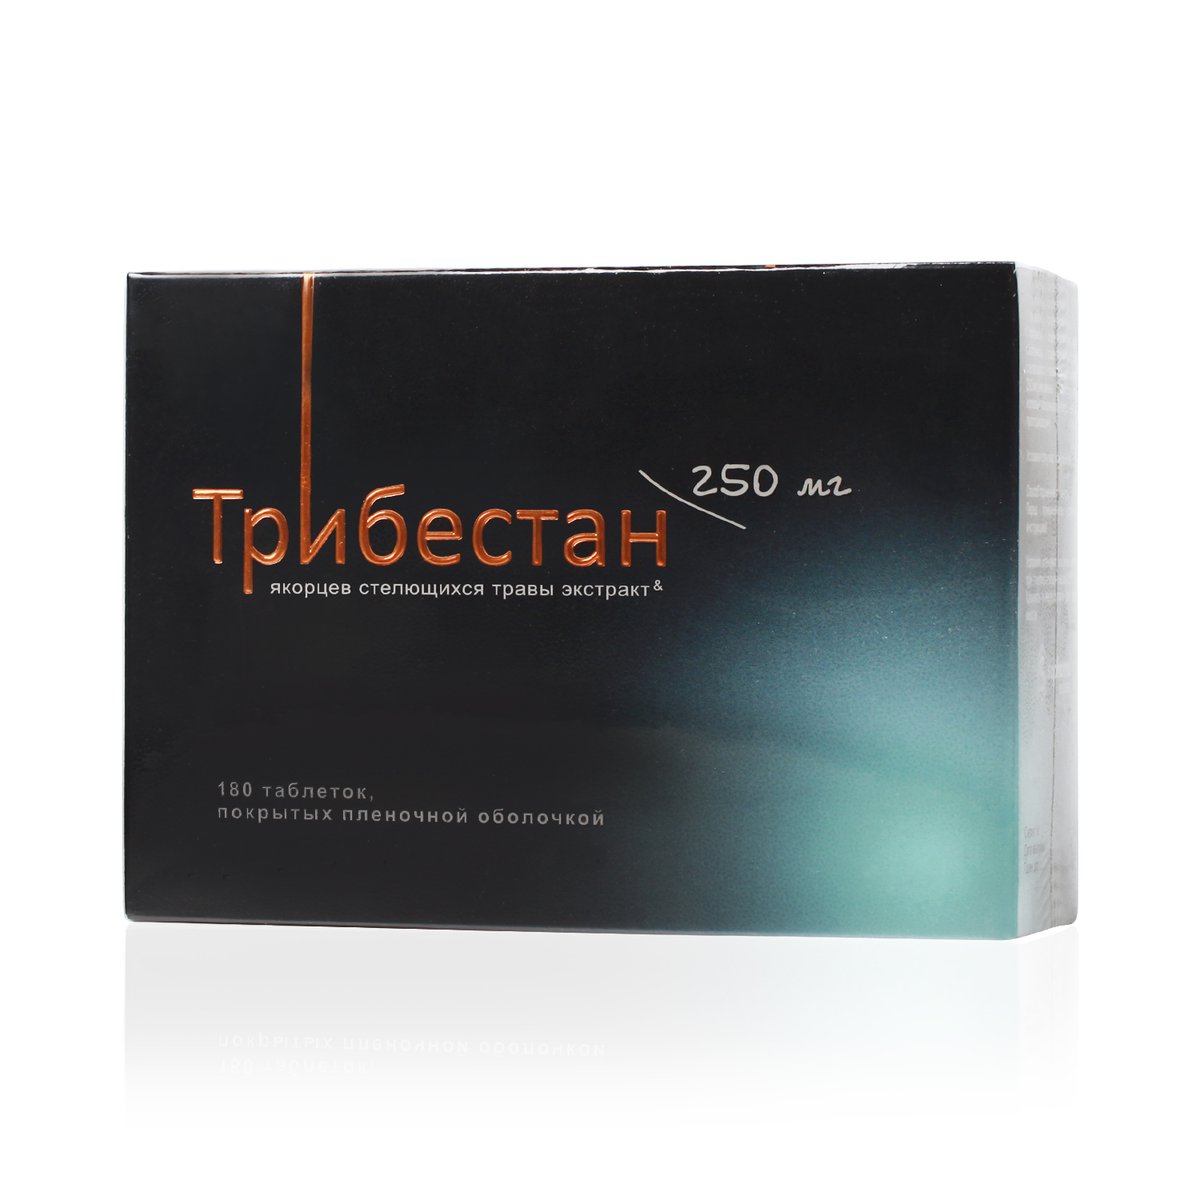 Трибестан (таблетки, 180 шт, 250 мг) - цена,  онлайн  .